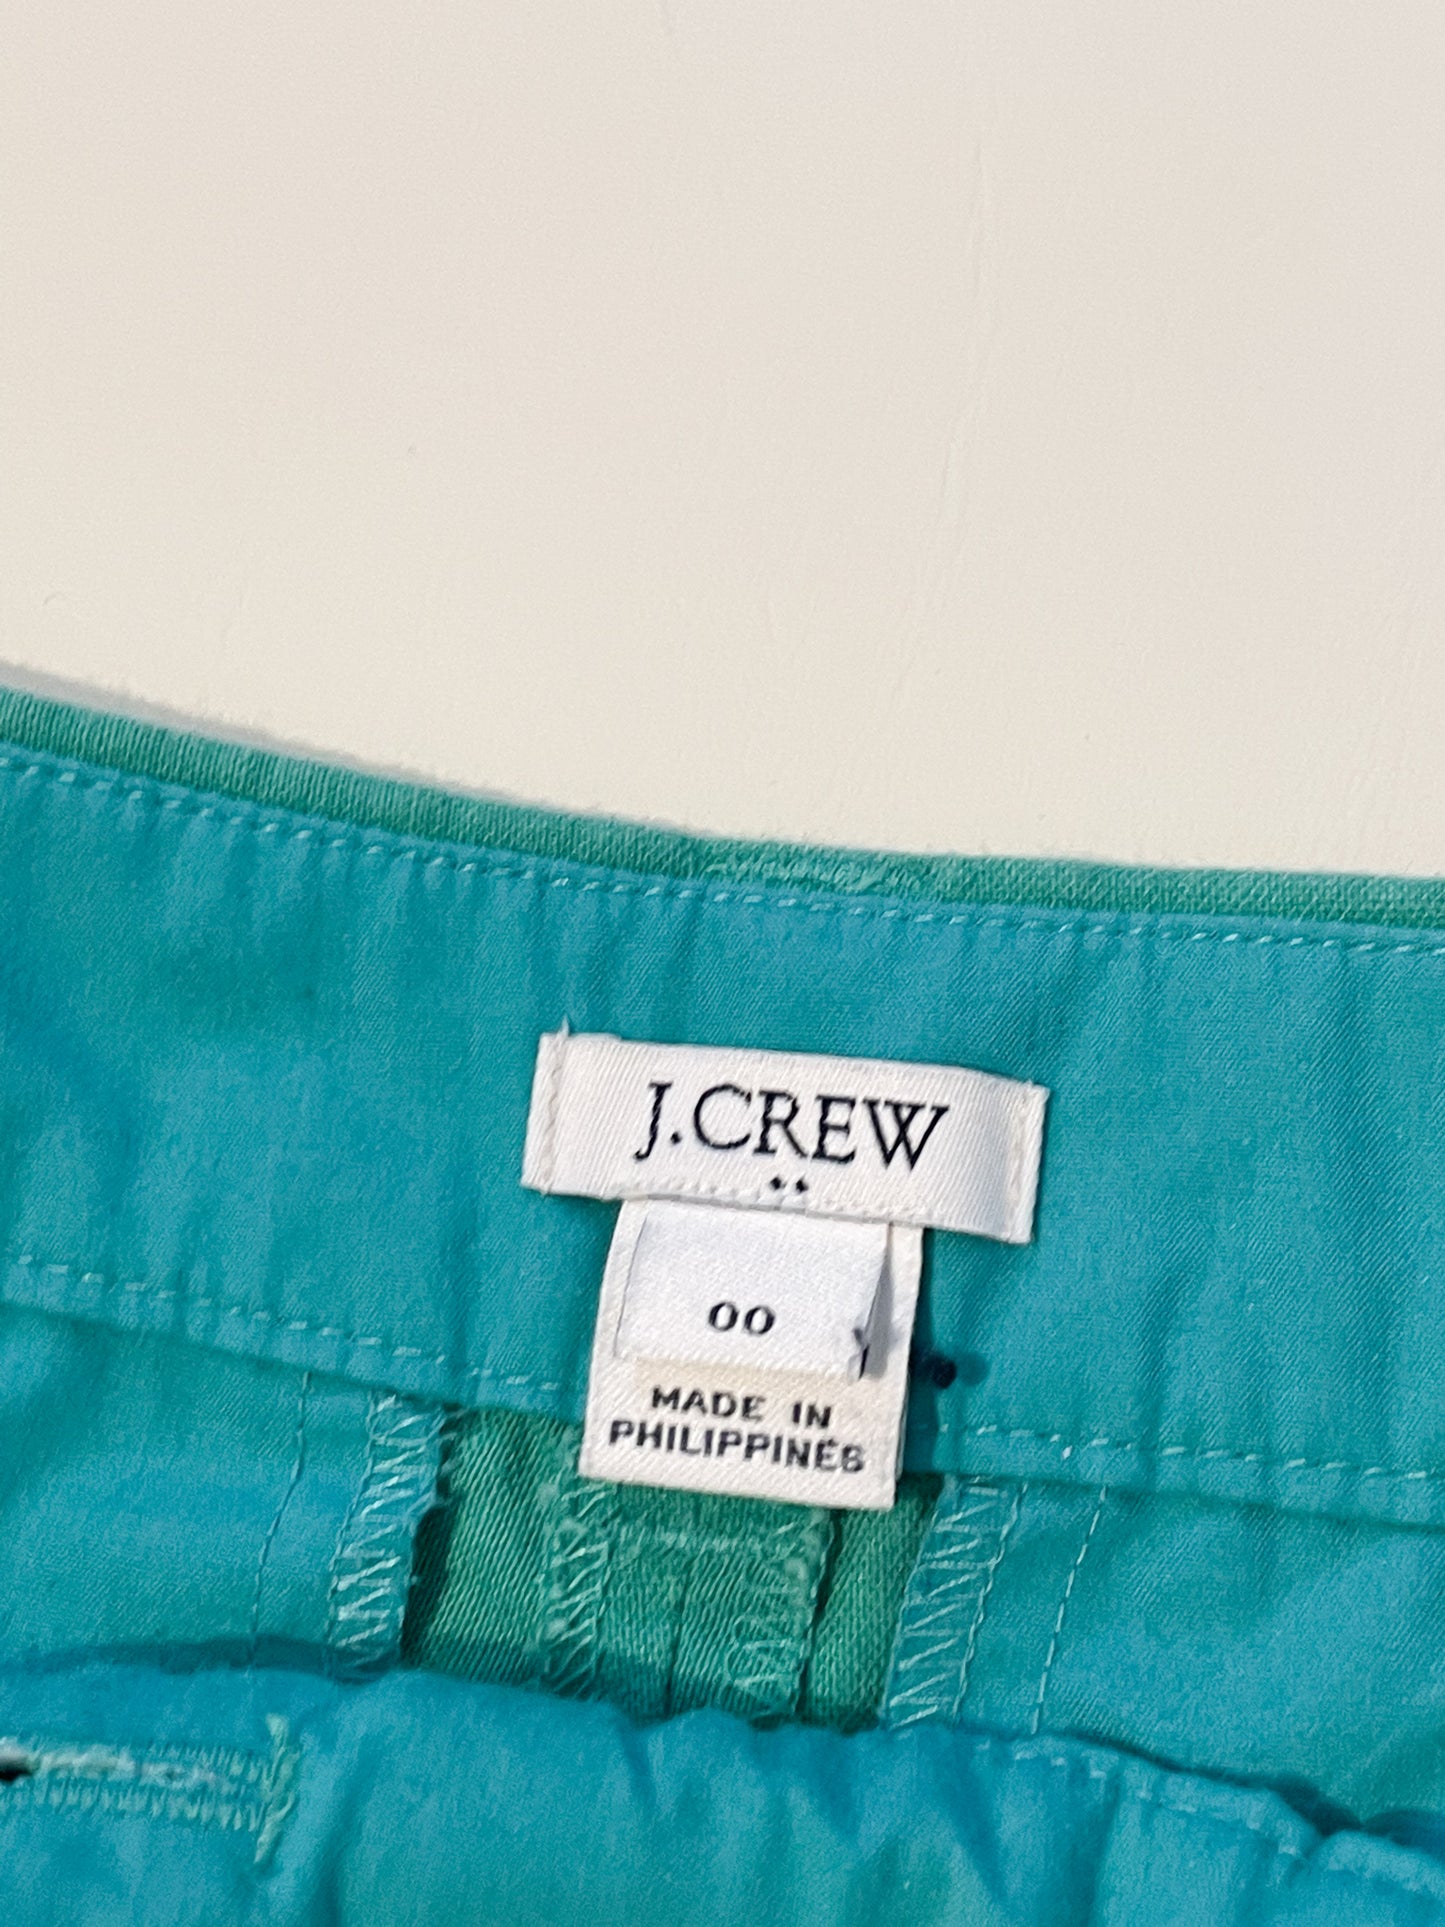 J. Crew Green Scalloped Linen Cotton Shorts - Size 00